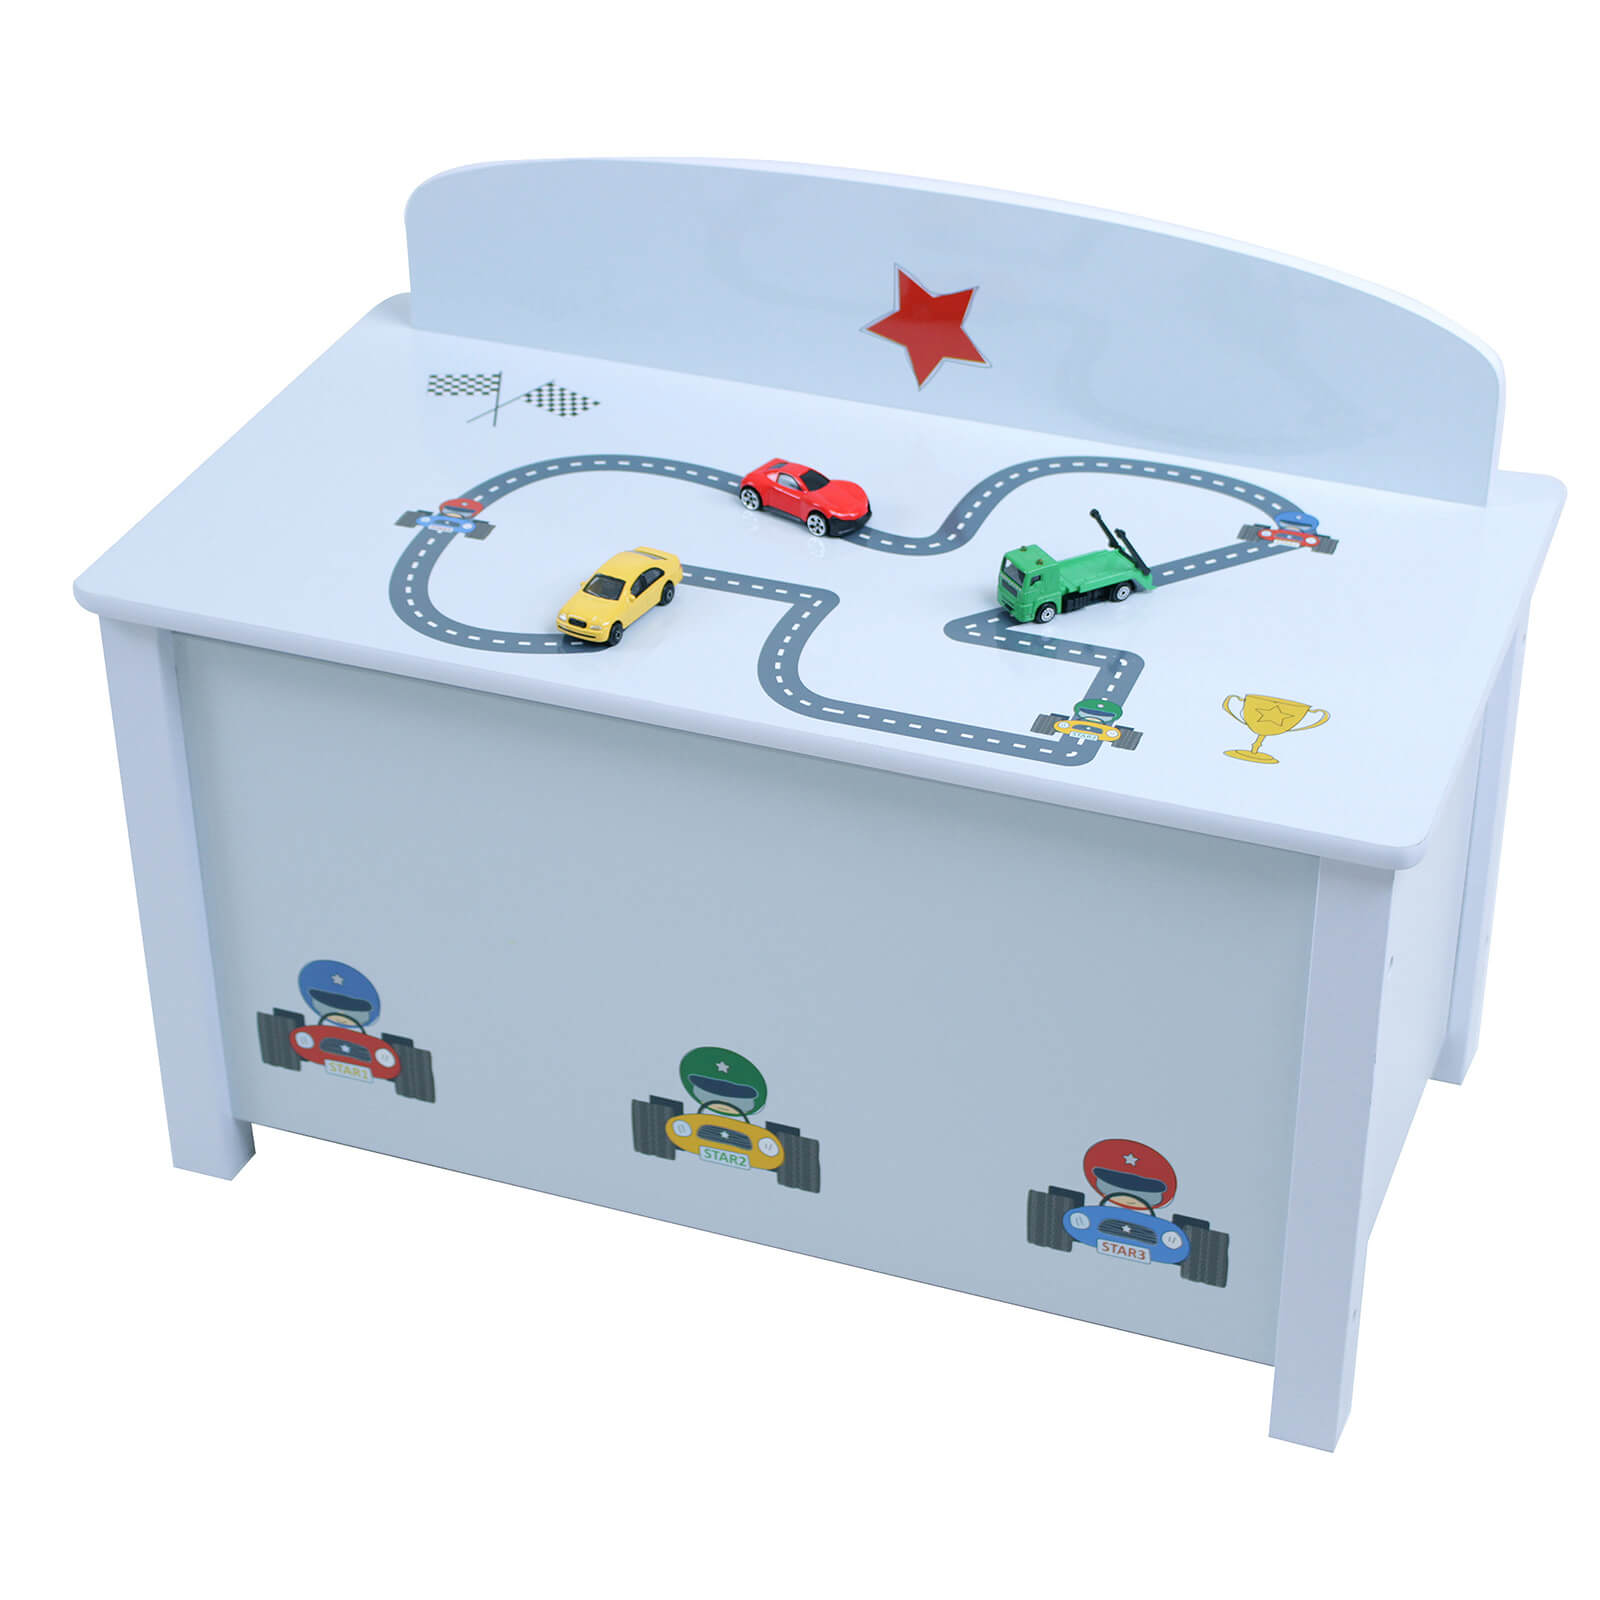 Stars & Cars Toy Box